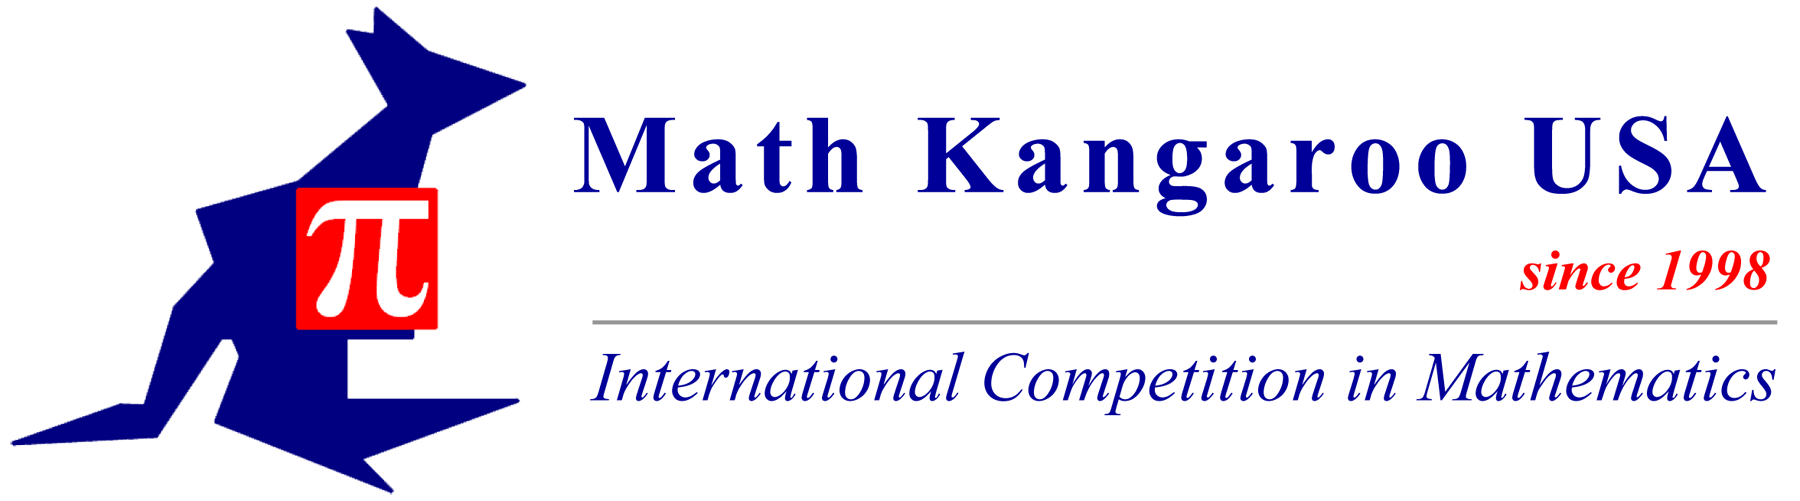 Math Kangaroo USA logo